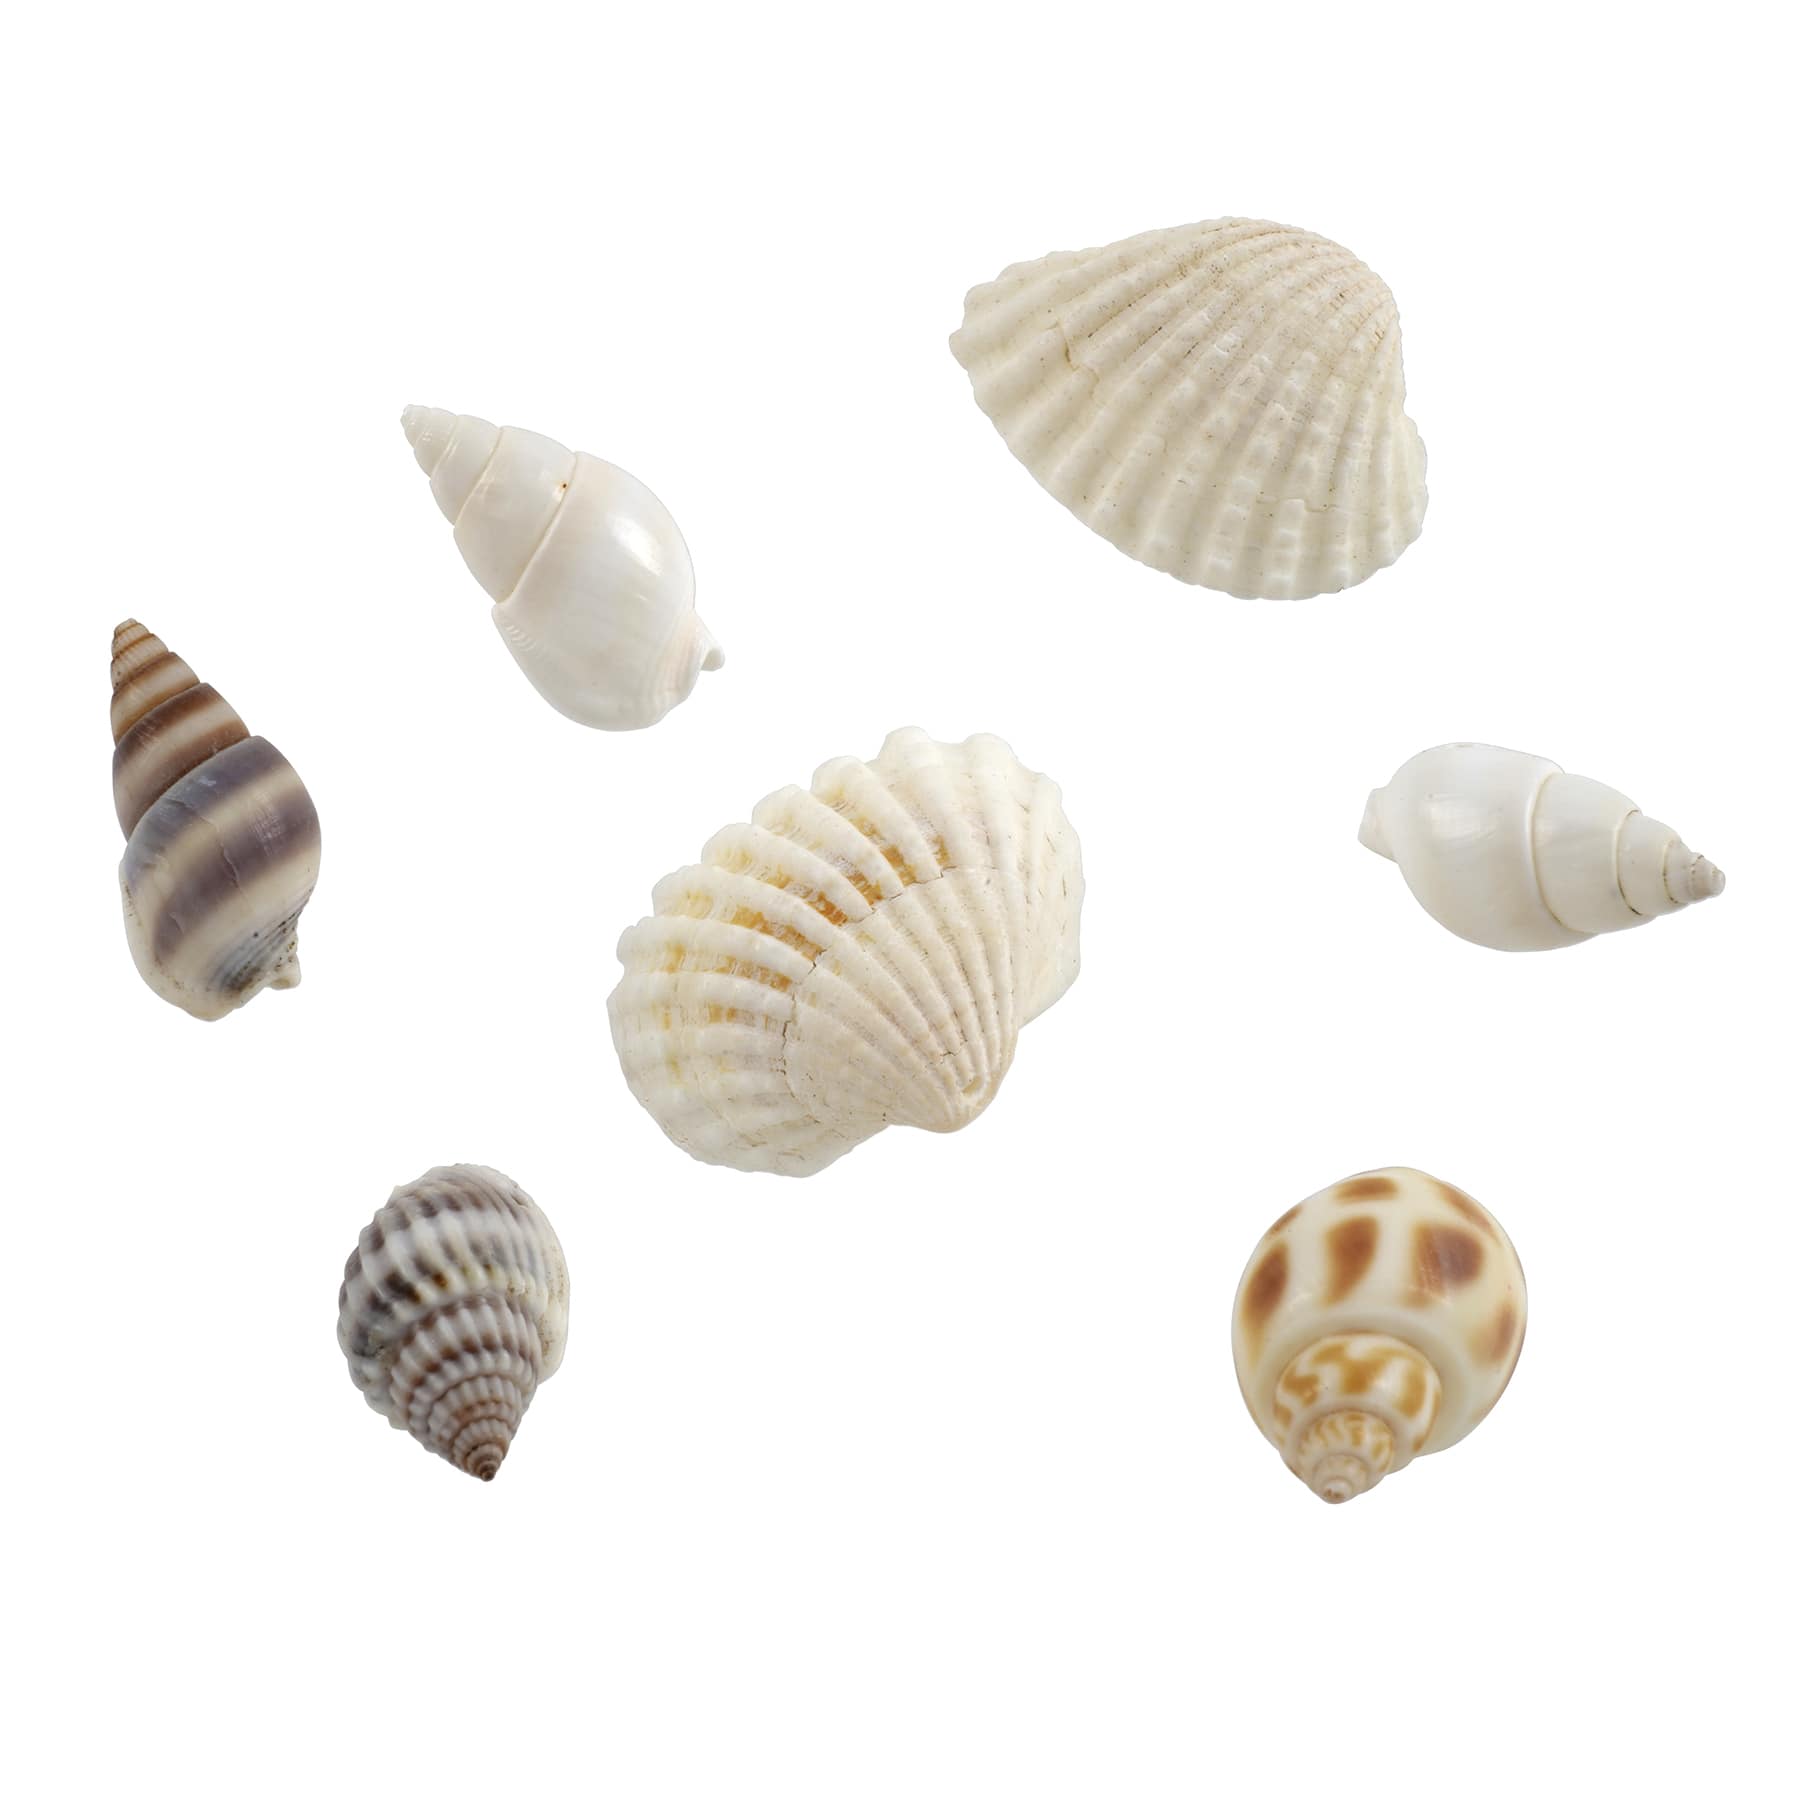 10-pack Painted Cowrie Shells Sliced Seashells Craft Beads Jewellery DIY  1.5-2cm